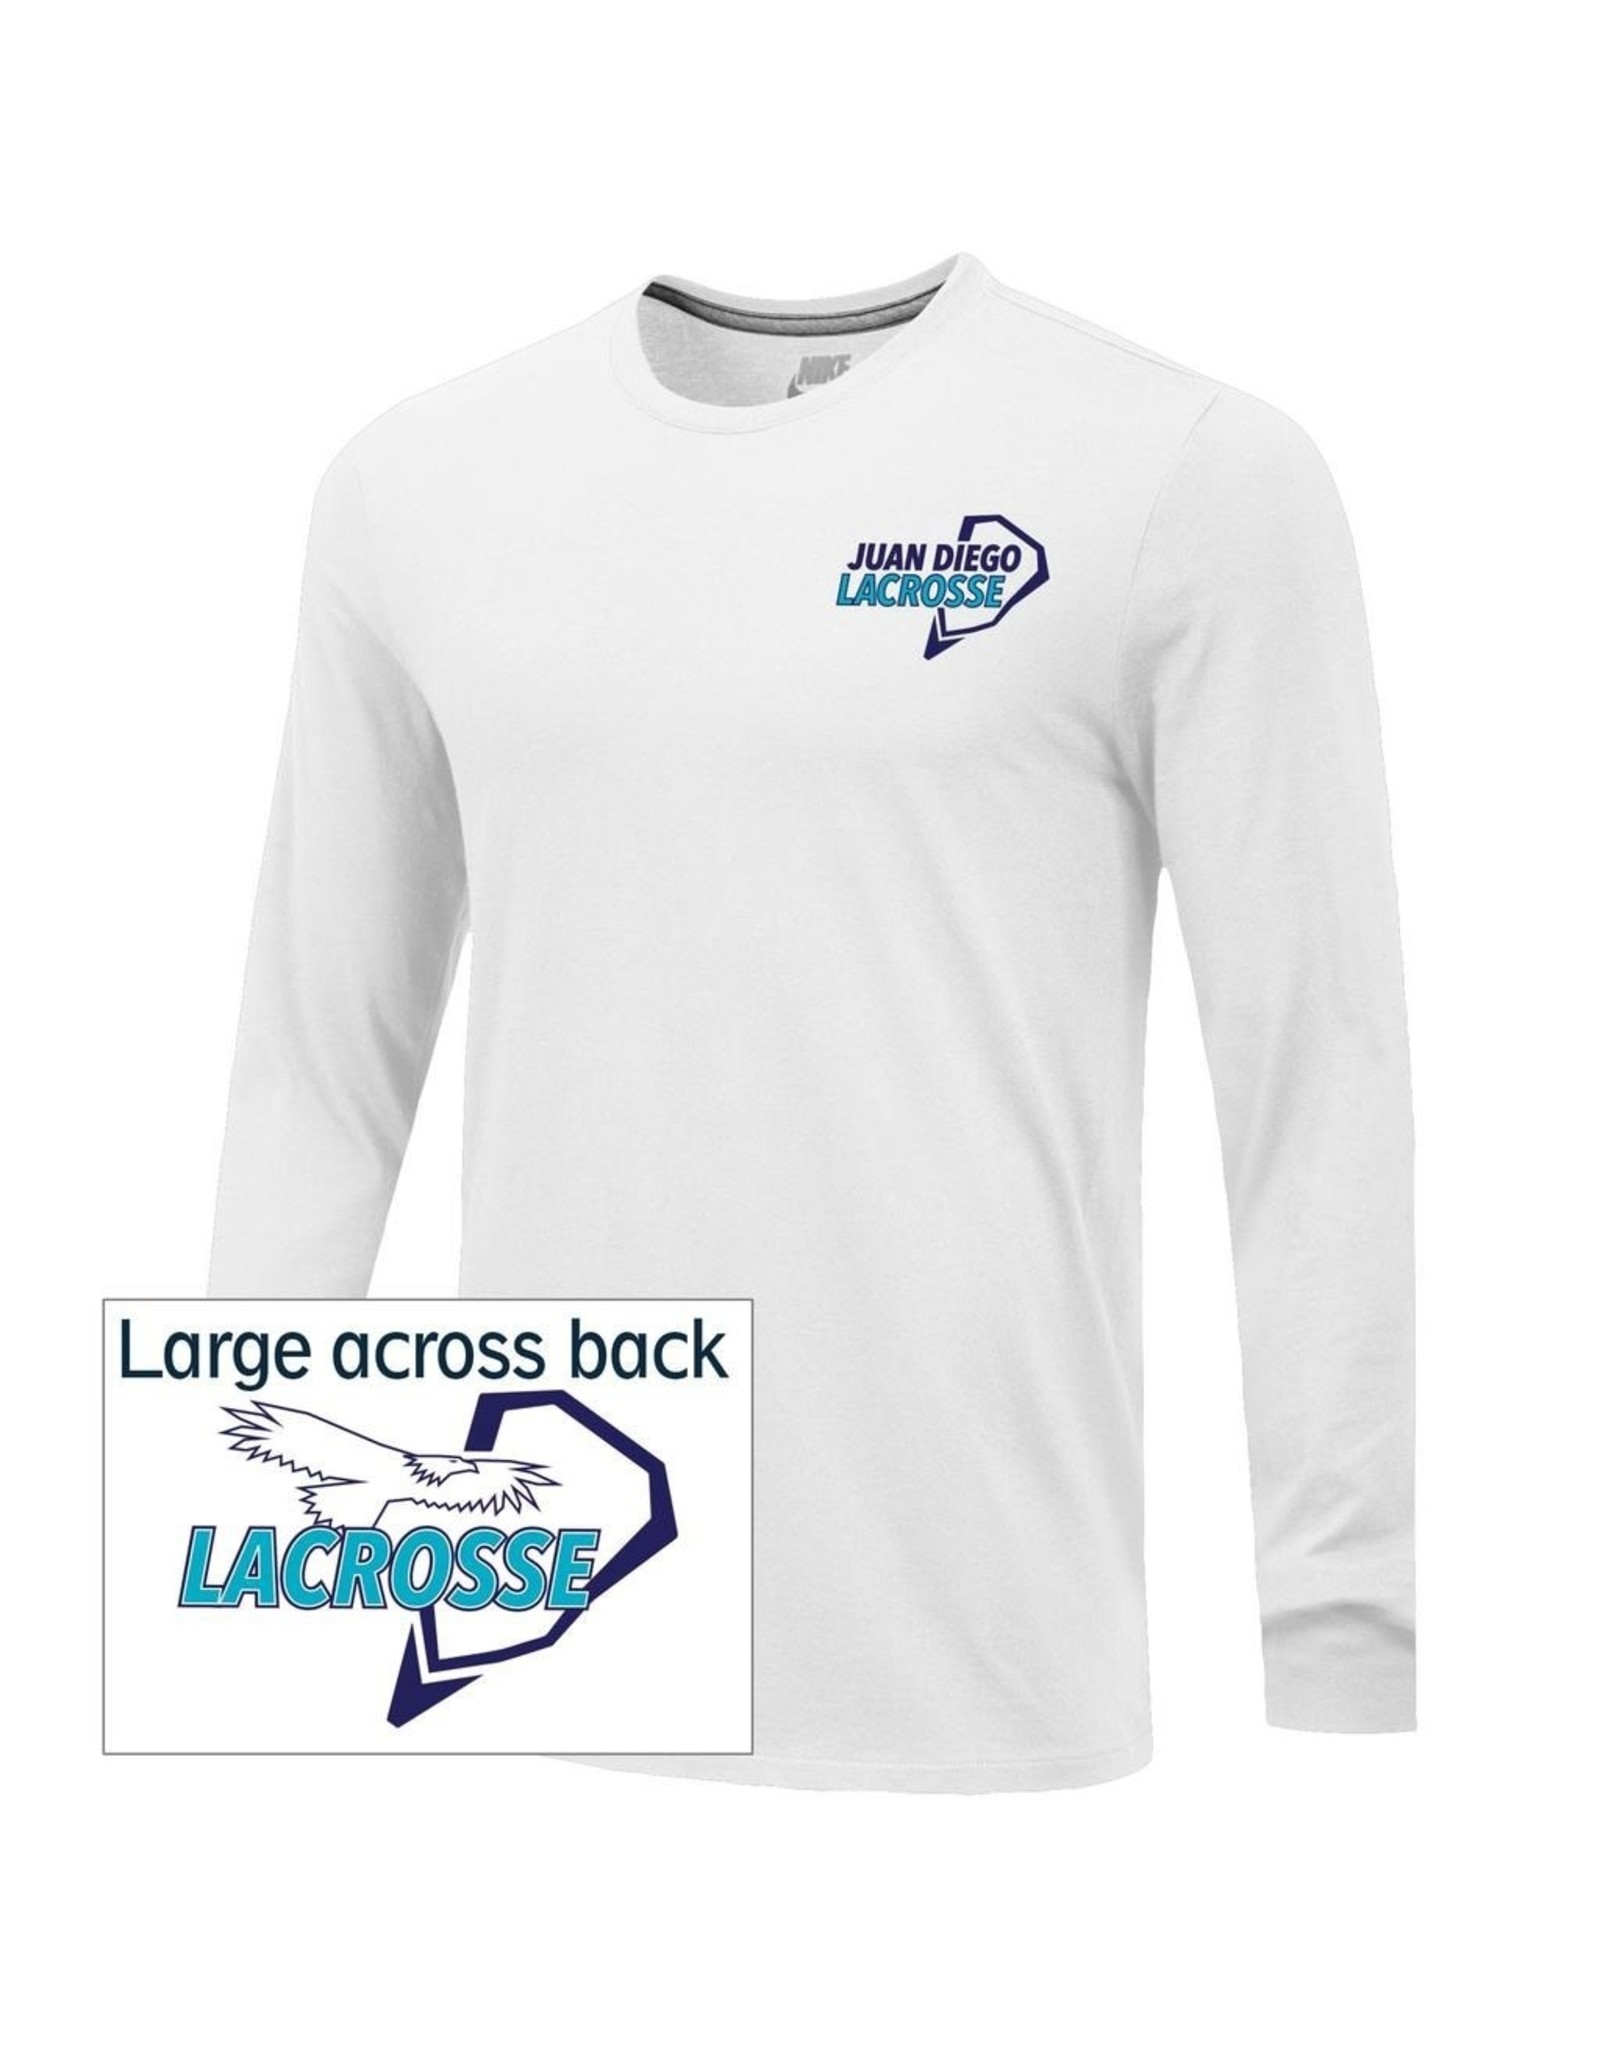 NON-UNIFORM Lacrosse - Custom JD Lacrosse  Long Sleeve Shirt